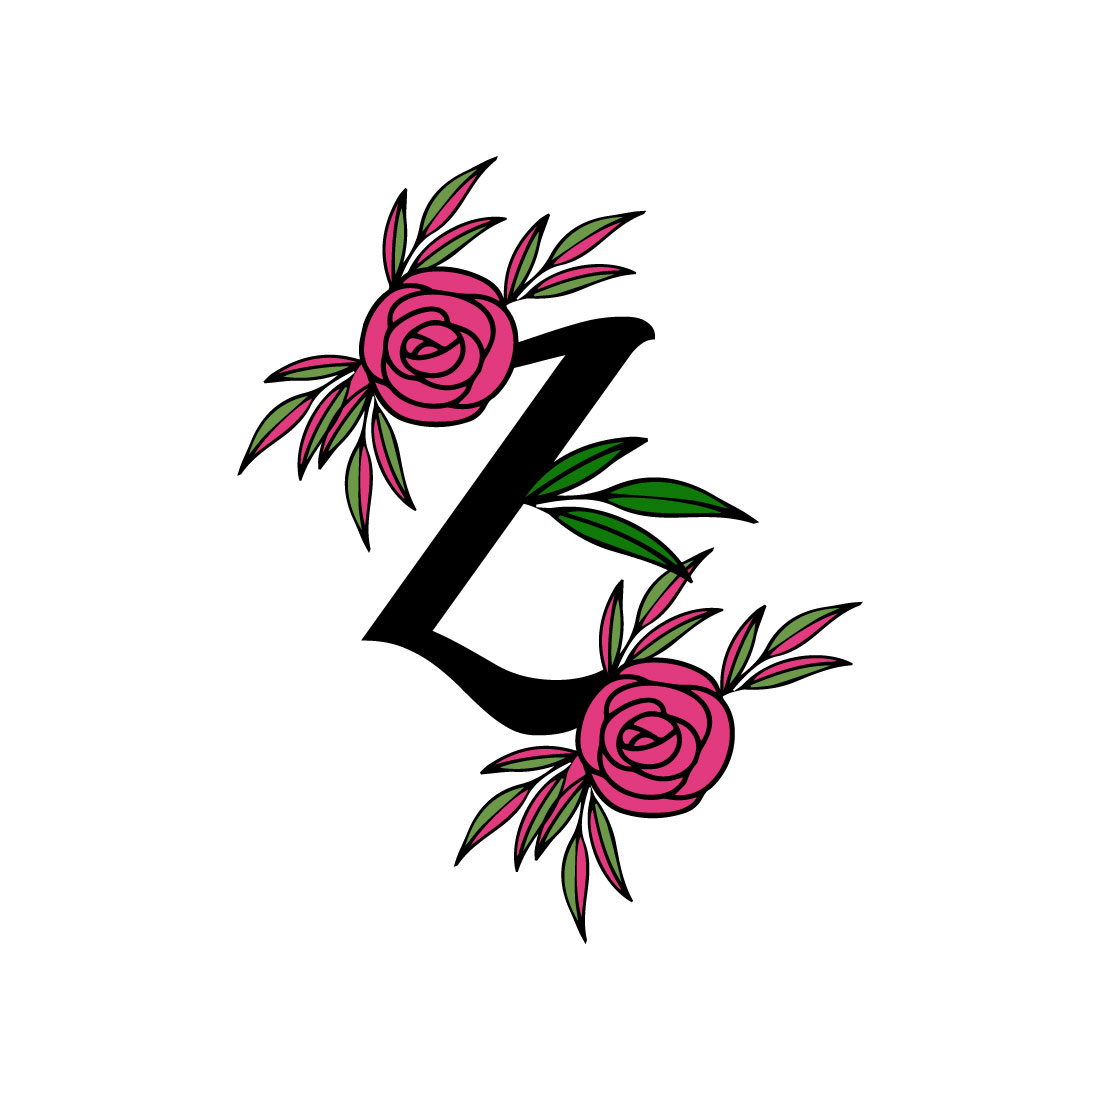 Free Rosey Z letter logo cover image.